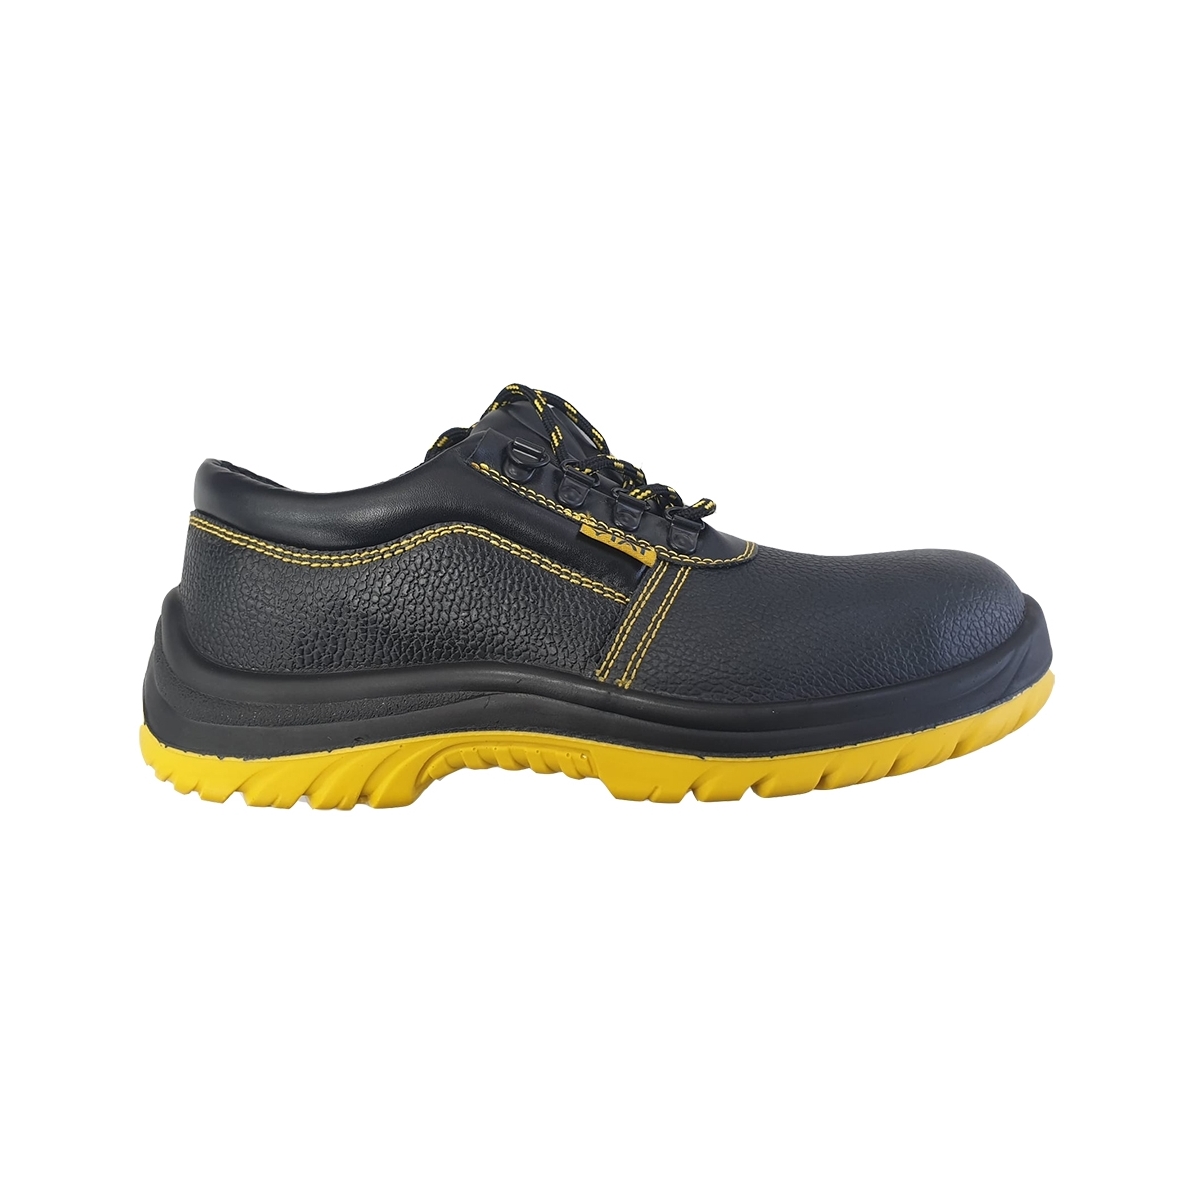 Zapato Piel Negra Y Amarilla Viat301 T-42 S3 - Bellota